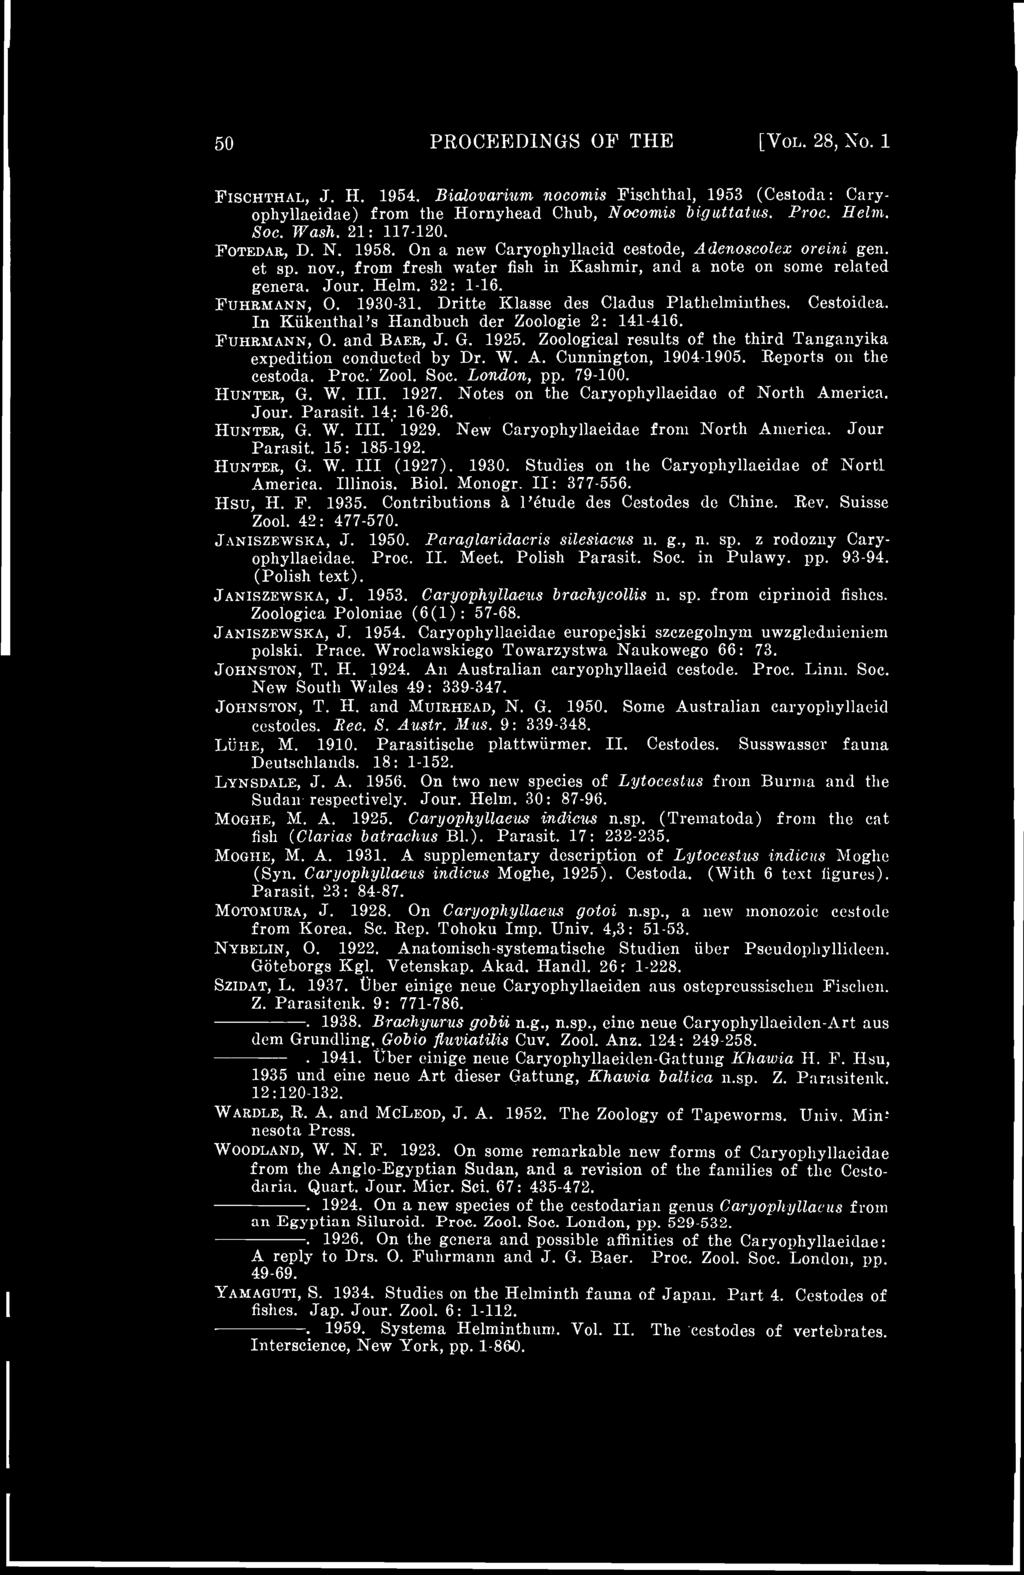 FUHRMANN, O. 1930-31. Dritte Klasse des Cladus Plathelminthes. Cestoidea. In Kiikenthal's Handbuch der Zoologie 2: 141-416. FUHBMANN, O. and BAER, J. G. 1925.